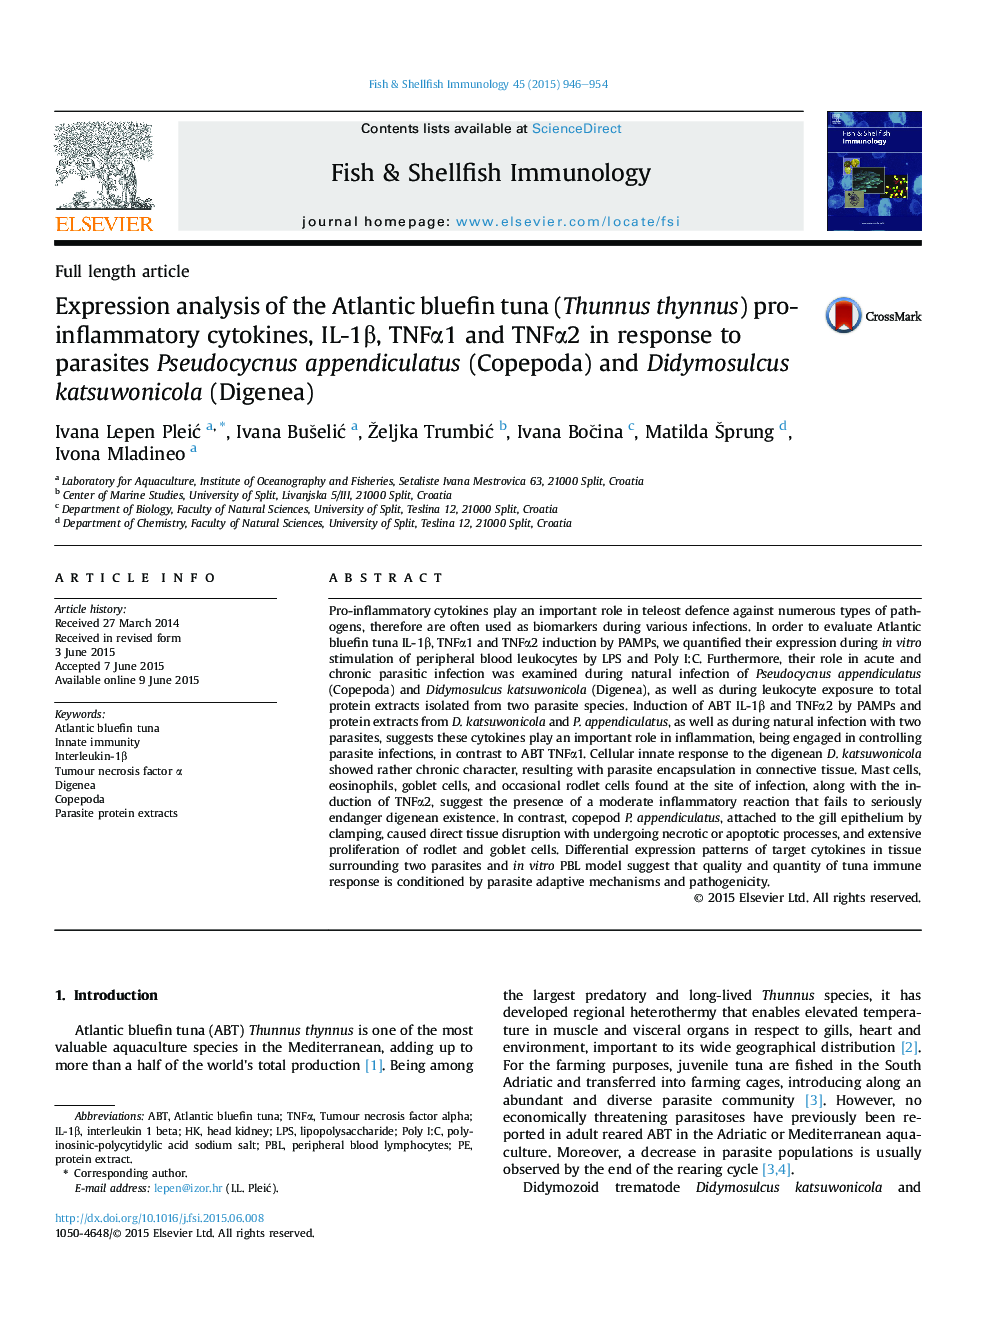 Expression analysis of the Atlantic bluefin tuna (Thunnus thynnus) pro-inflammatory cytokines, IL-1Î², TNFÎ±1 and TNFÎ±2 in response to parasites Pseudocycnus appendiculatus (Copepoda) and Didymosulcus katsuwonicola (Digenea)